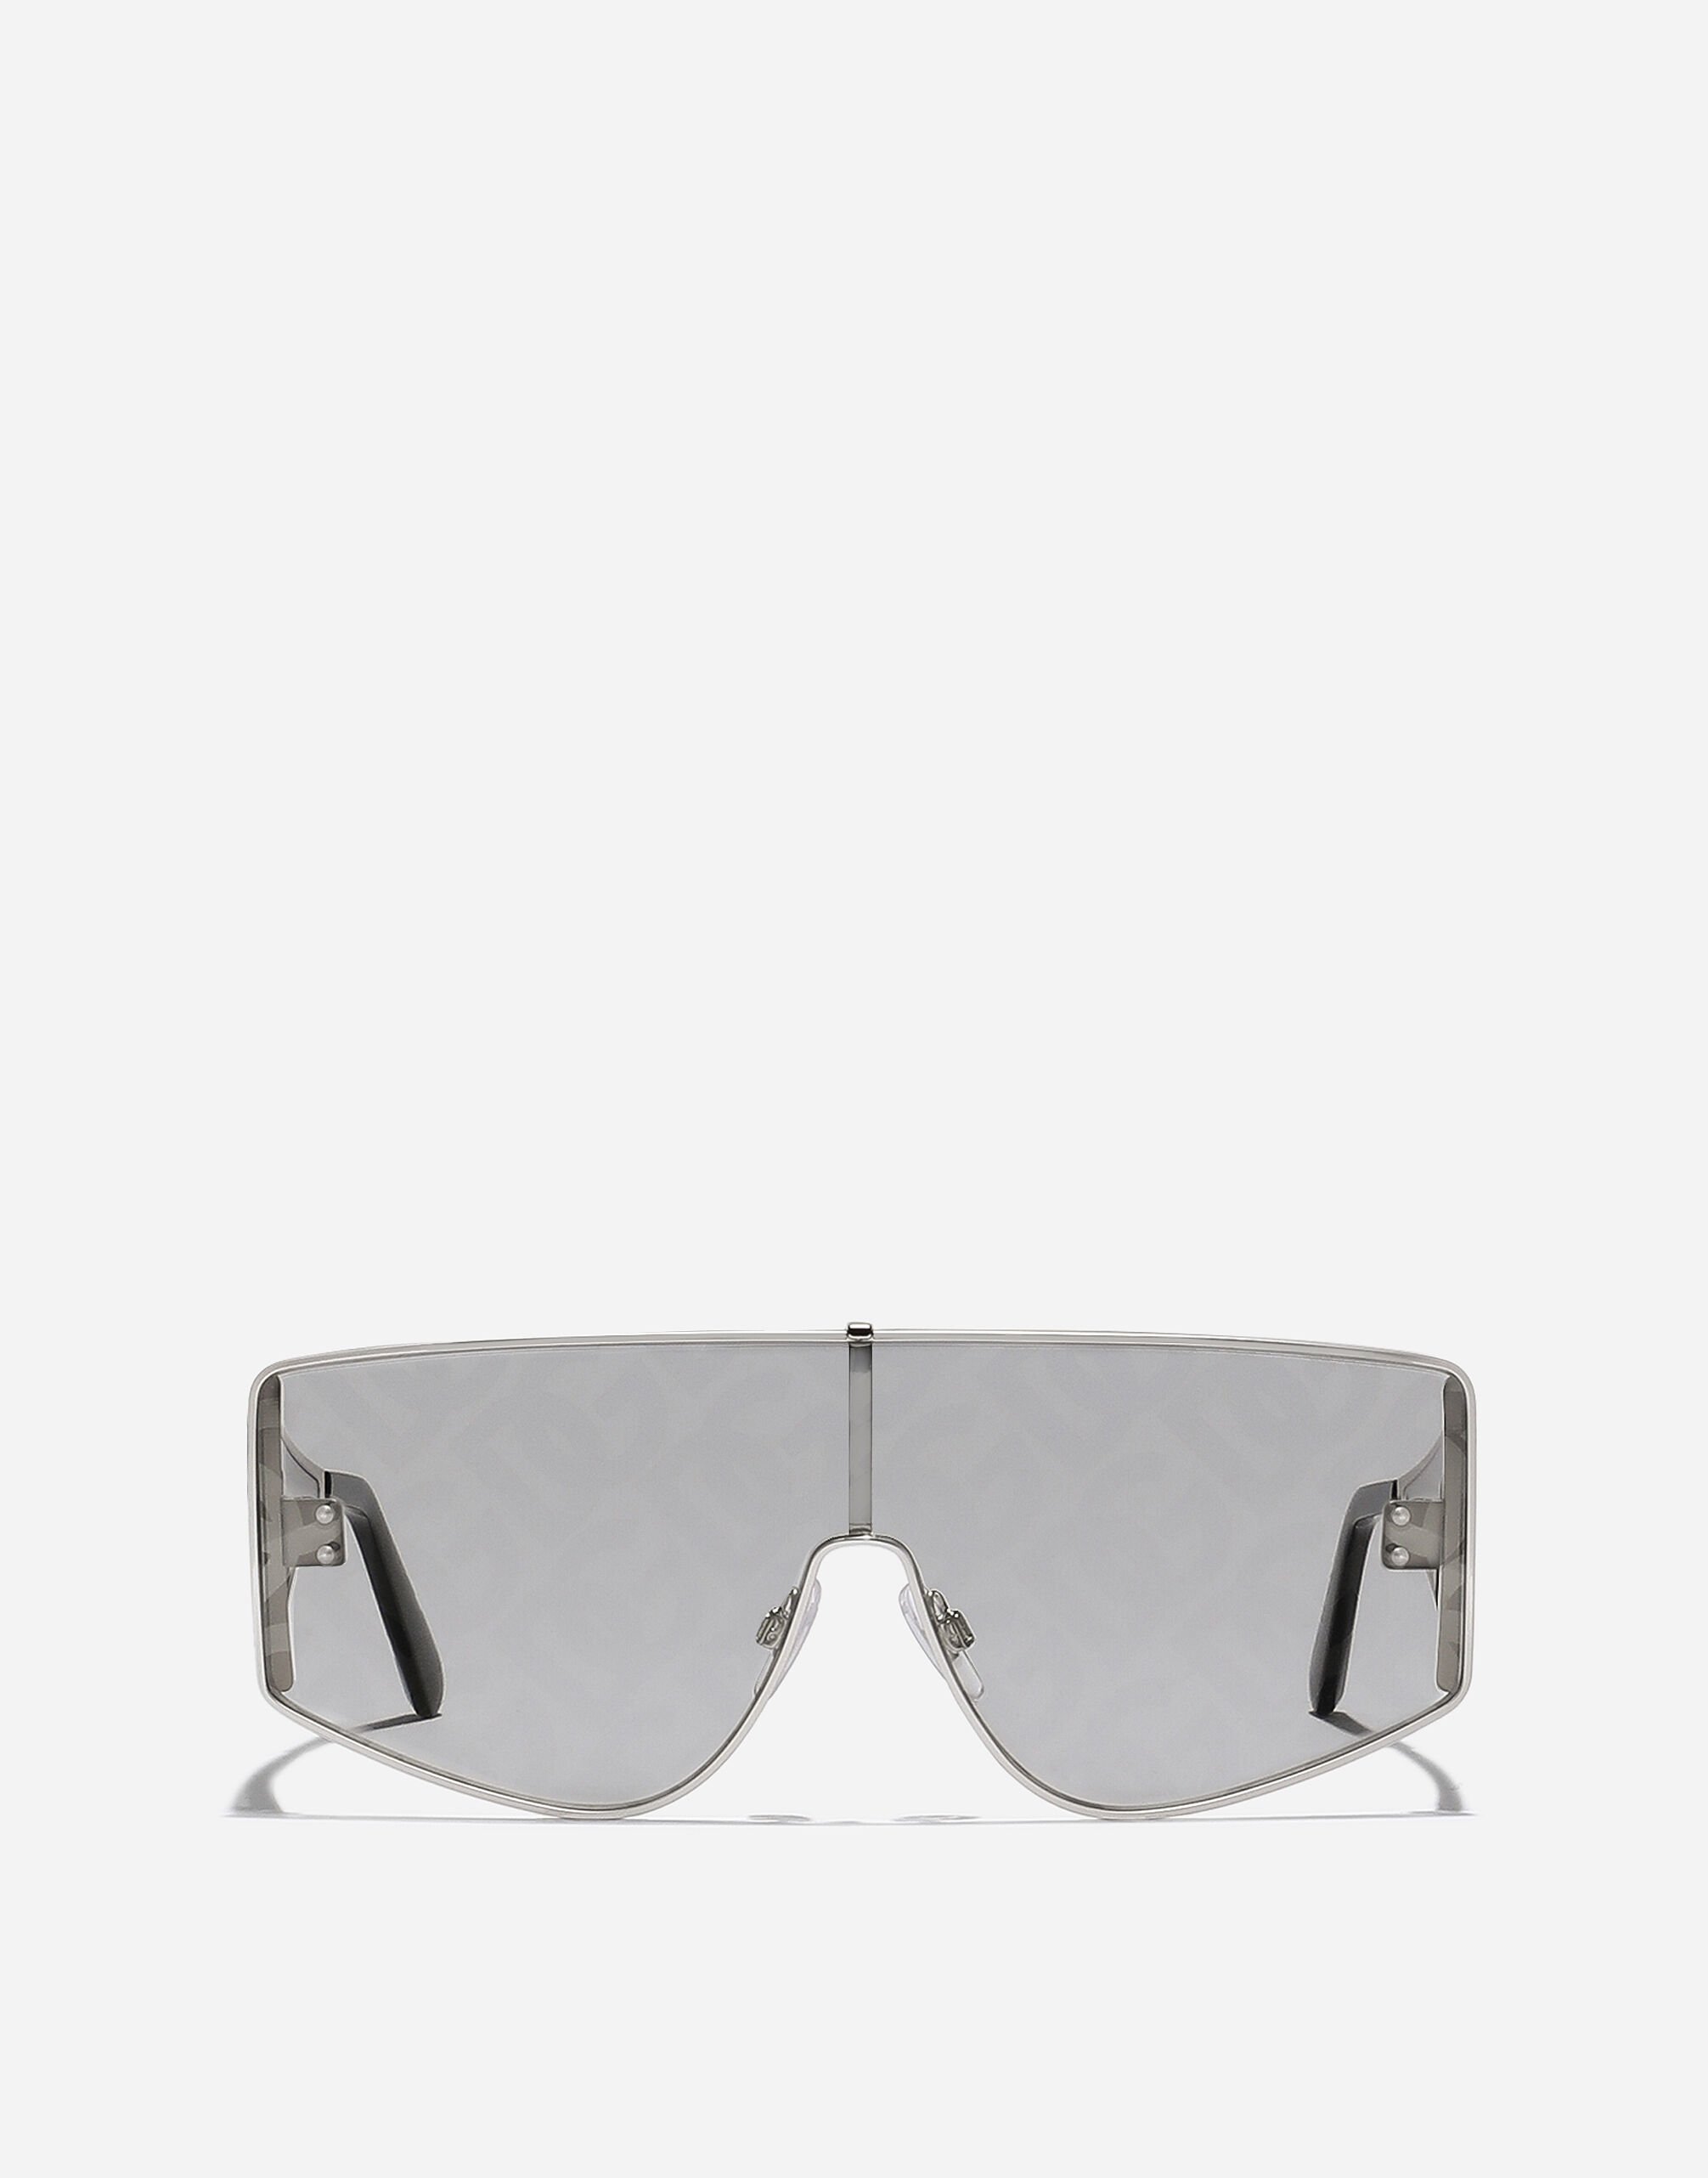 Dolce & Gabbana DG Sharped  sunglasses Black VG4467VP187